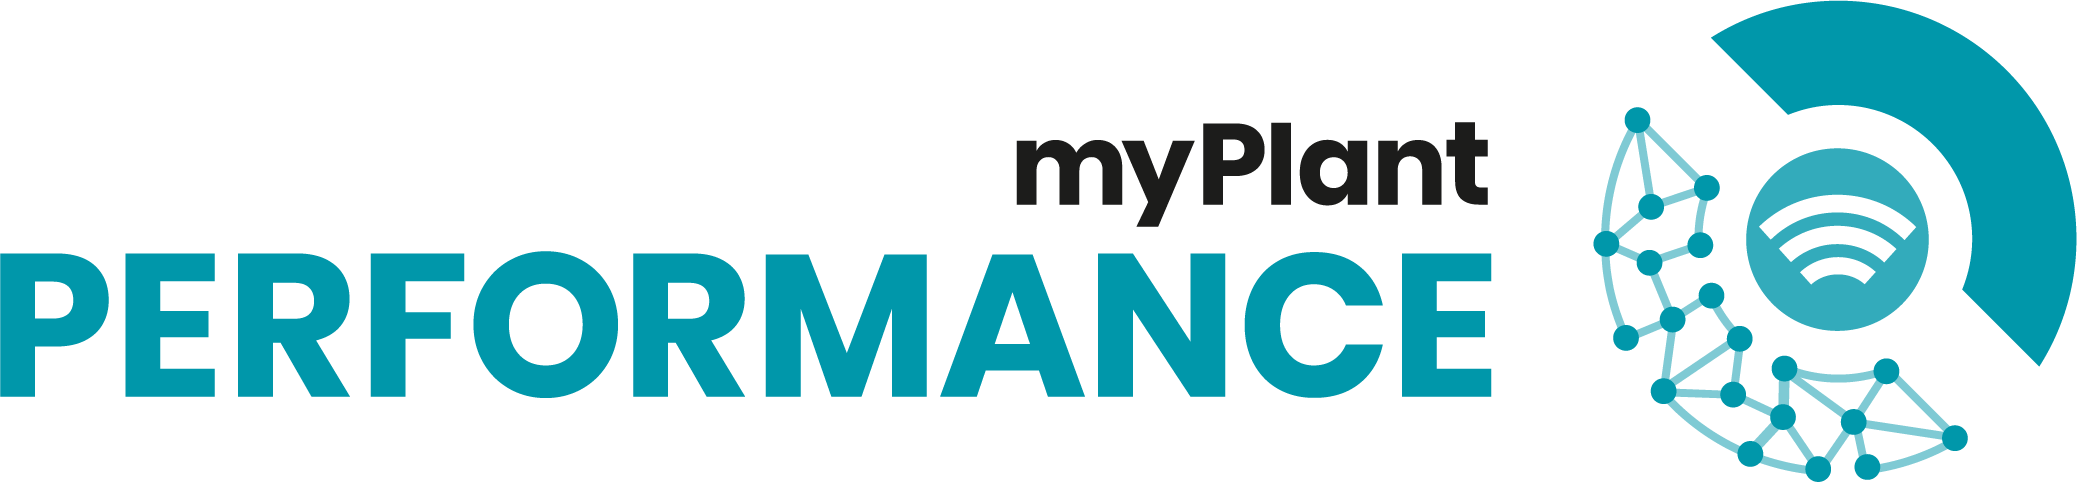 myPlant Performance Logo